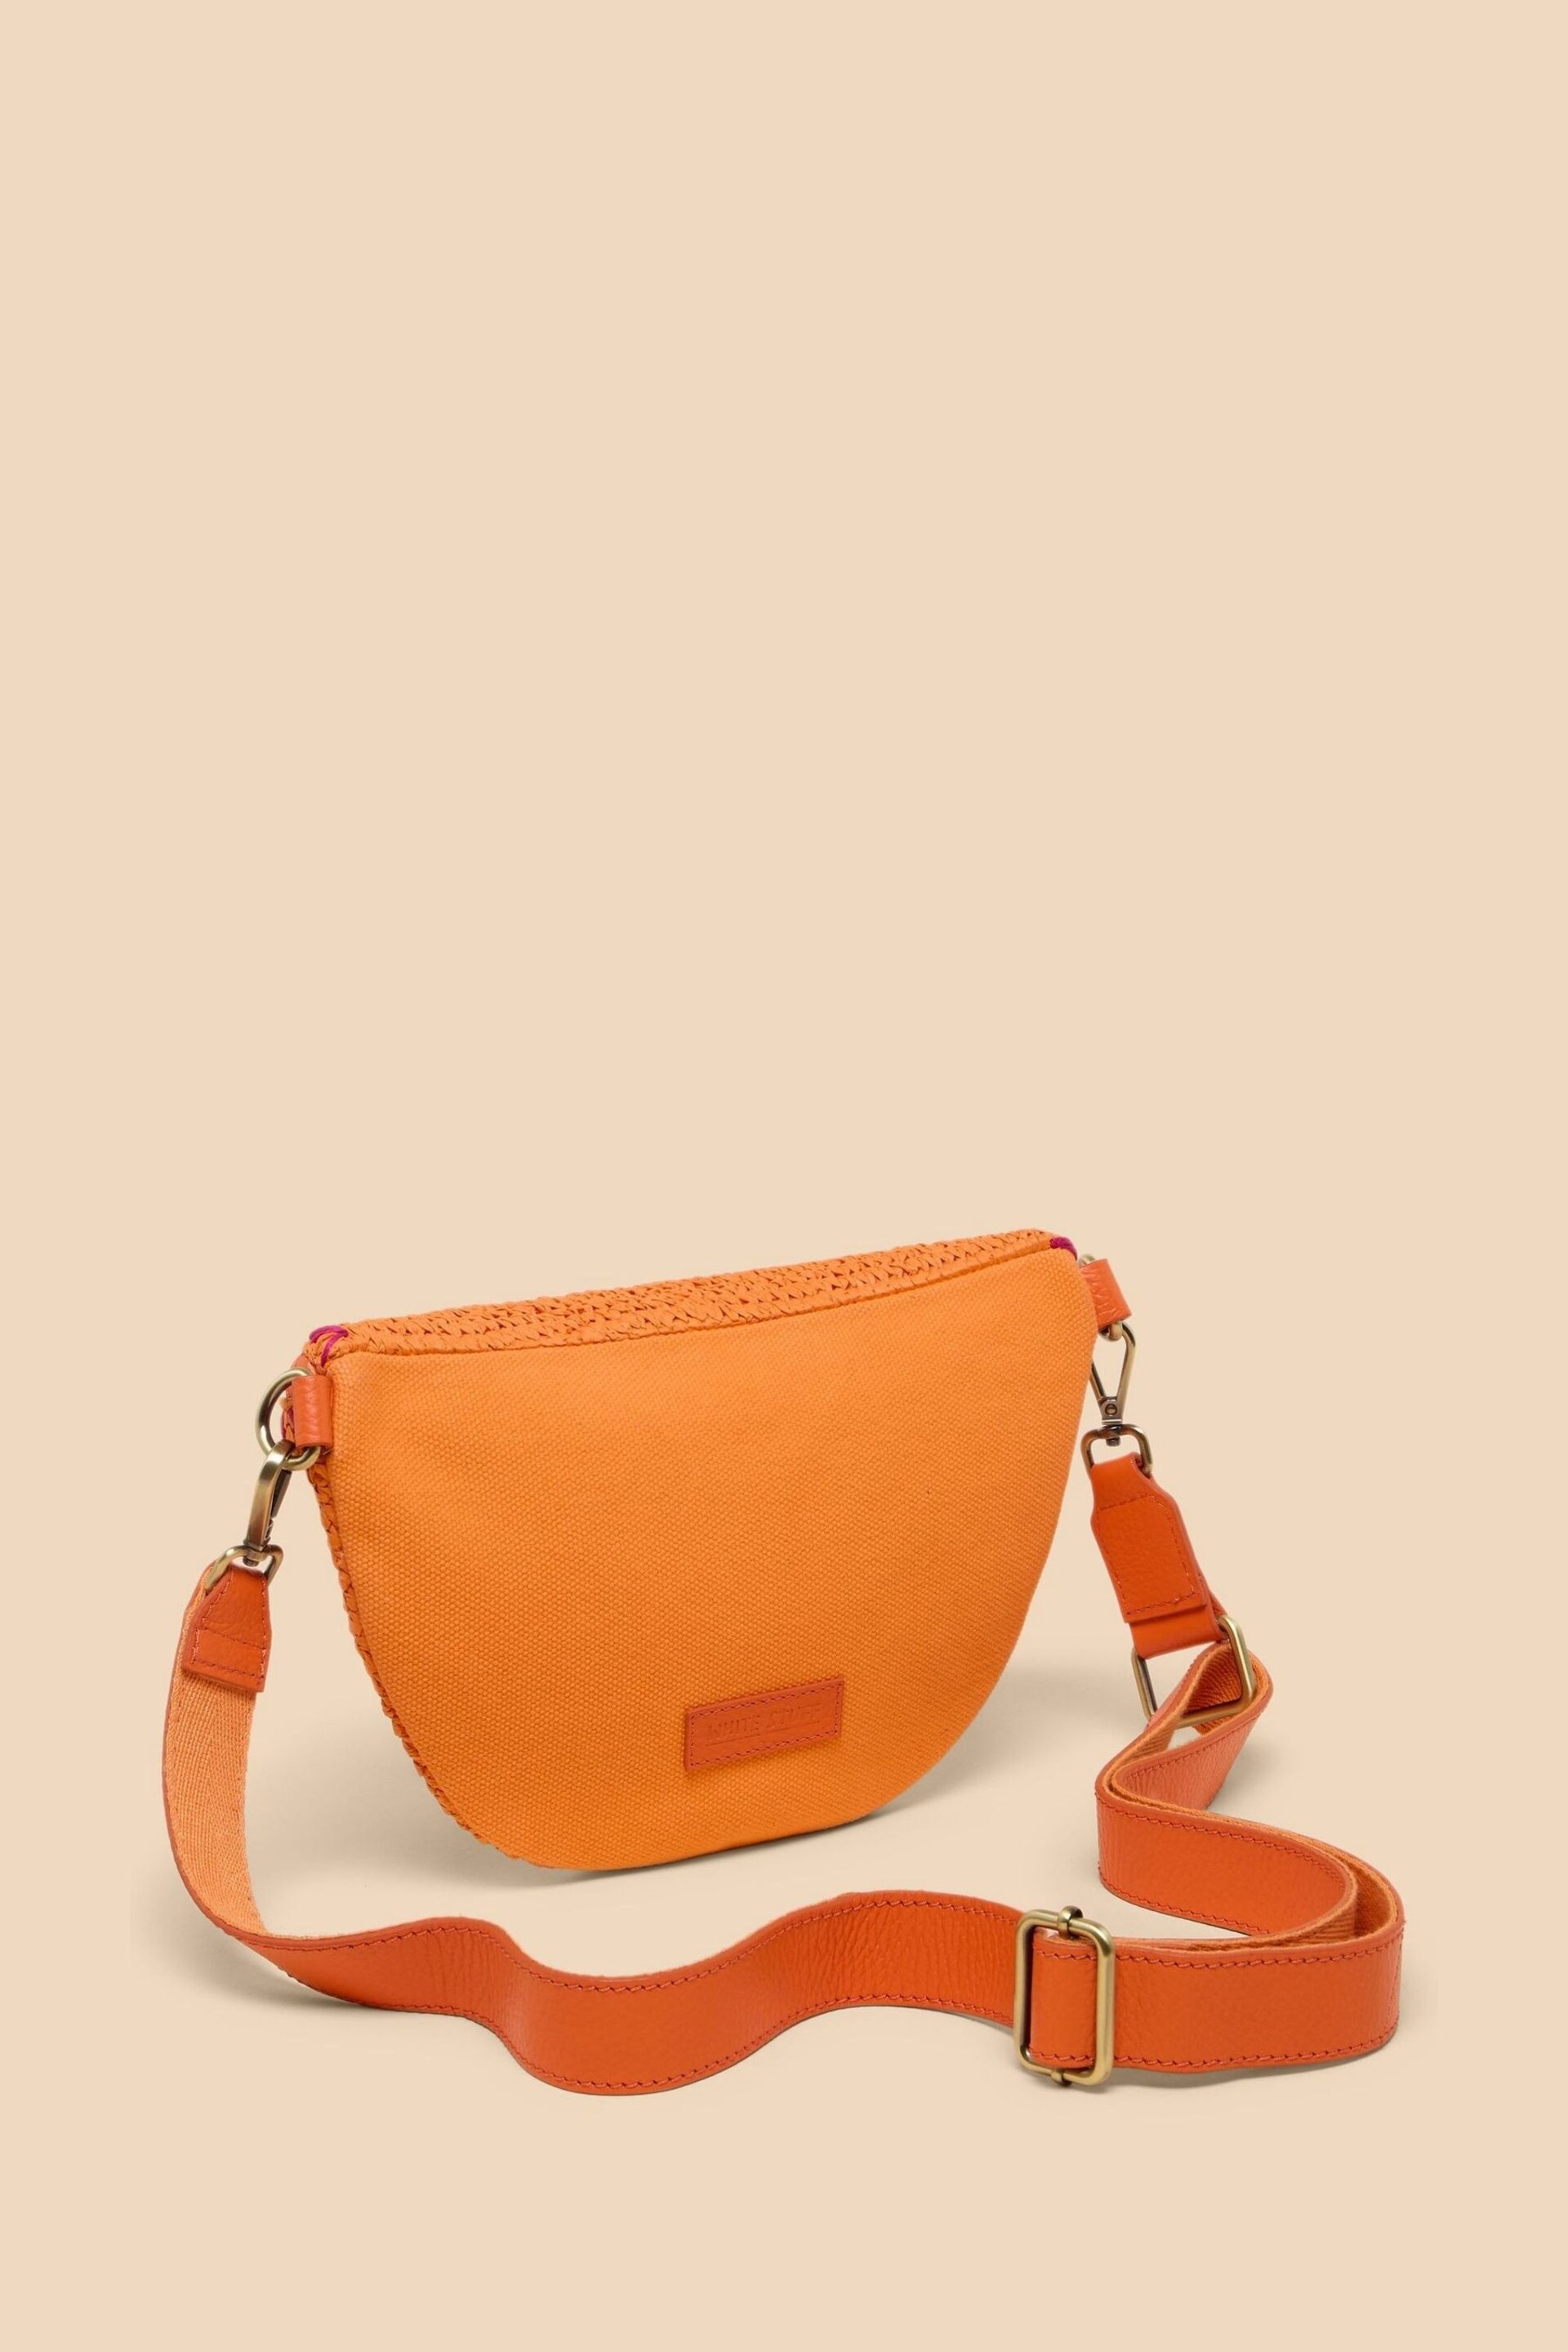 White Stuff Orange Mini  Sebby Raffia Sling Bag - Image 2 of 4